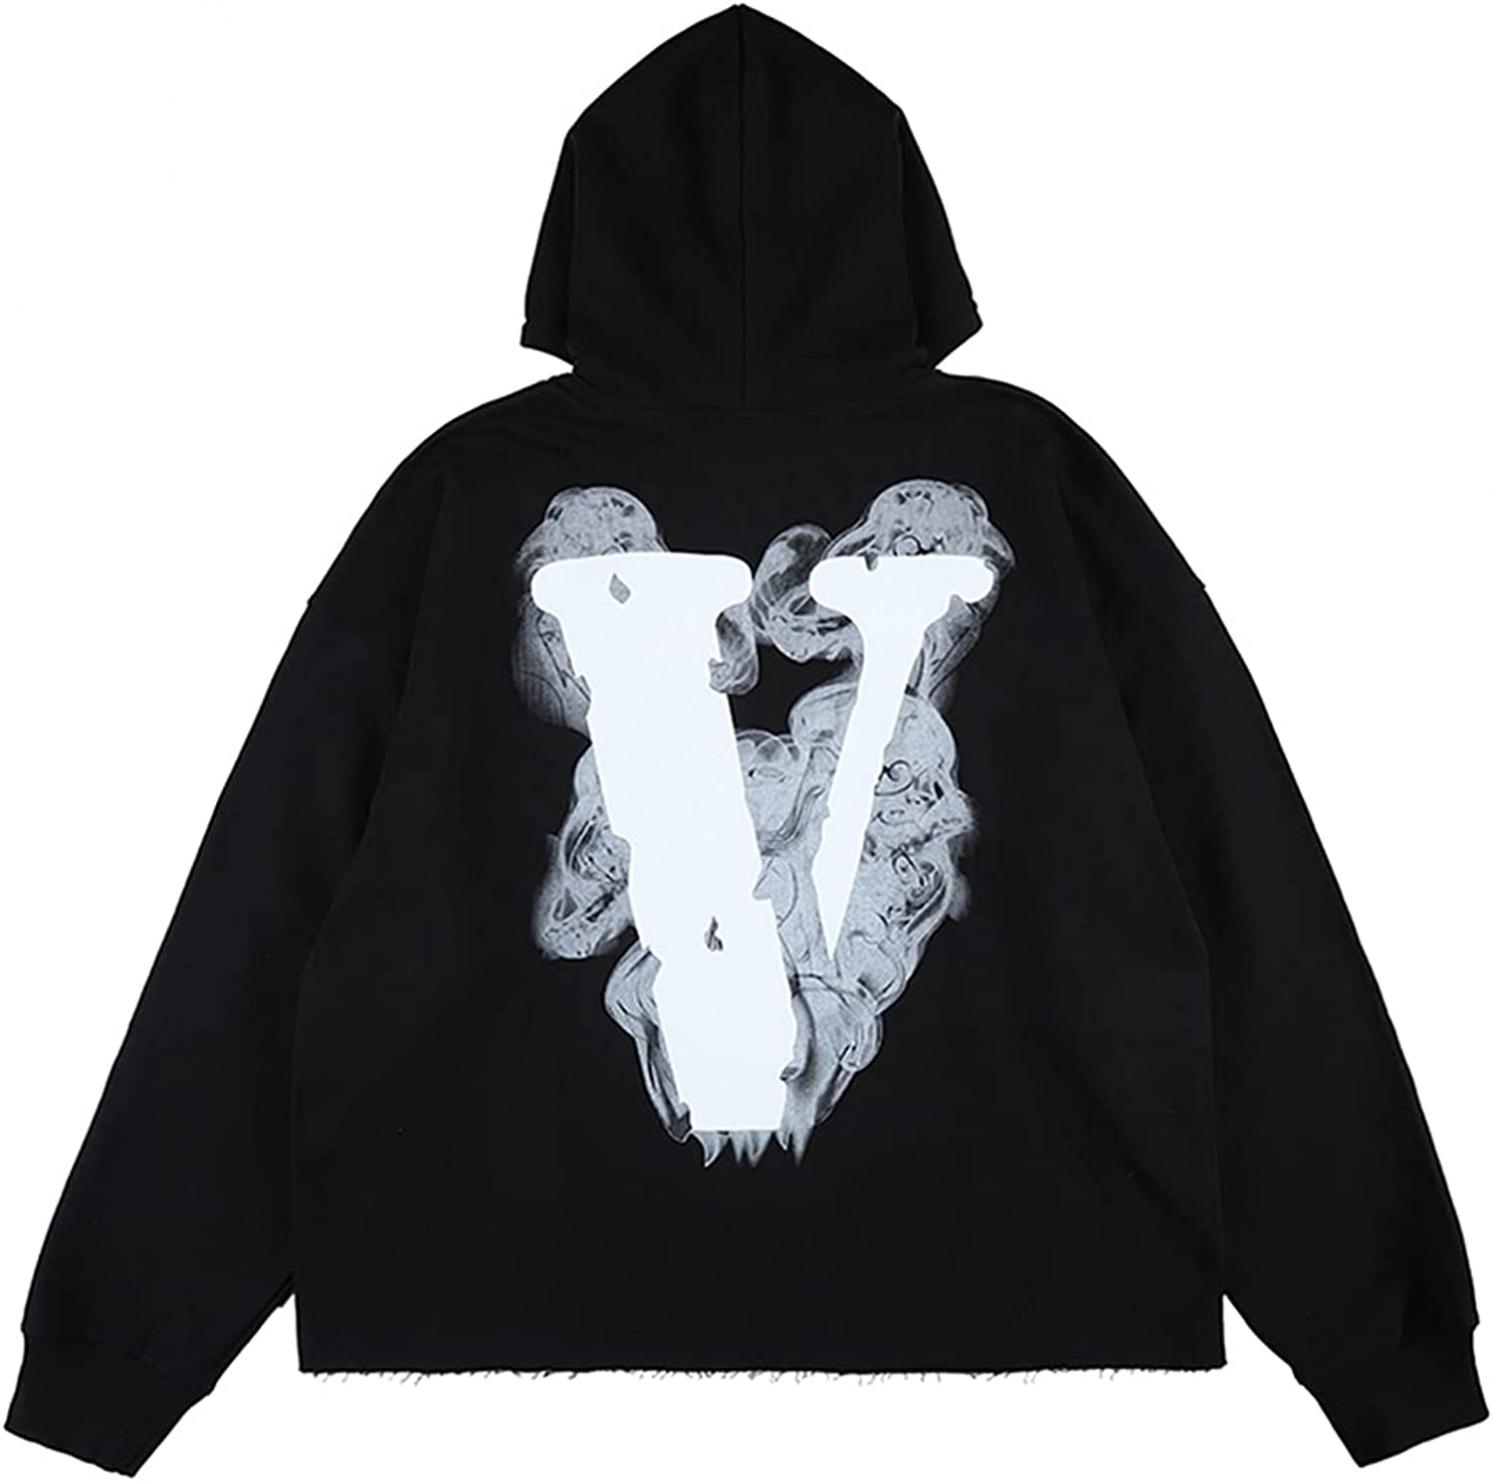 Unisex Hoodies Smoke V Letter Graphic Rapper Gothic Aesthetic Demon Patten Oversized Cotton Pullover Hooded Sweatshirt